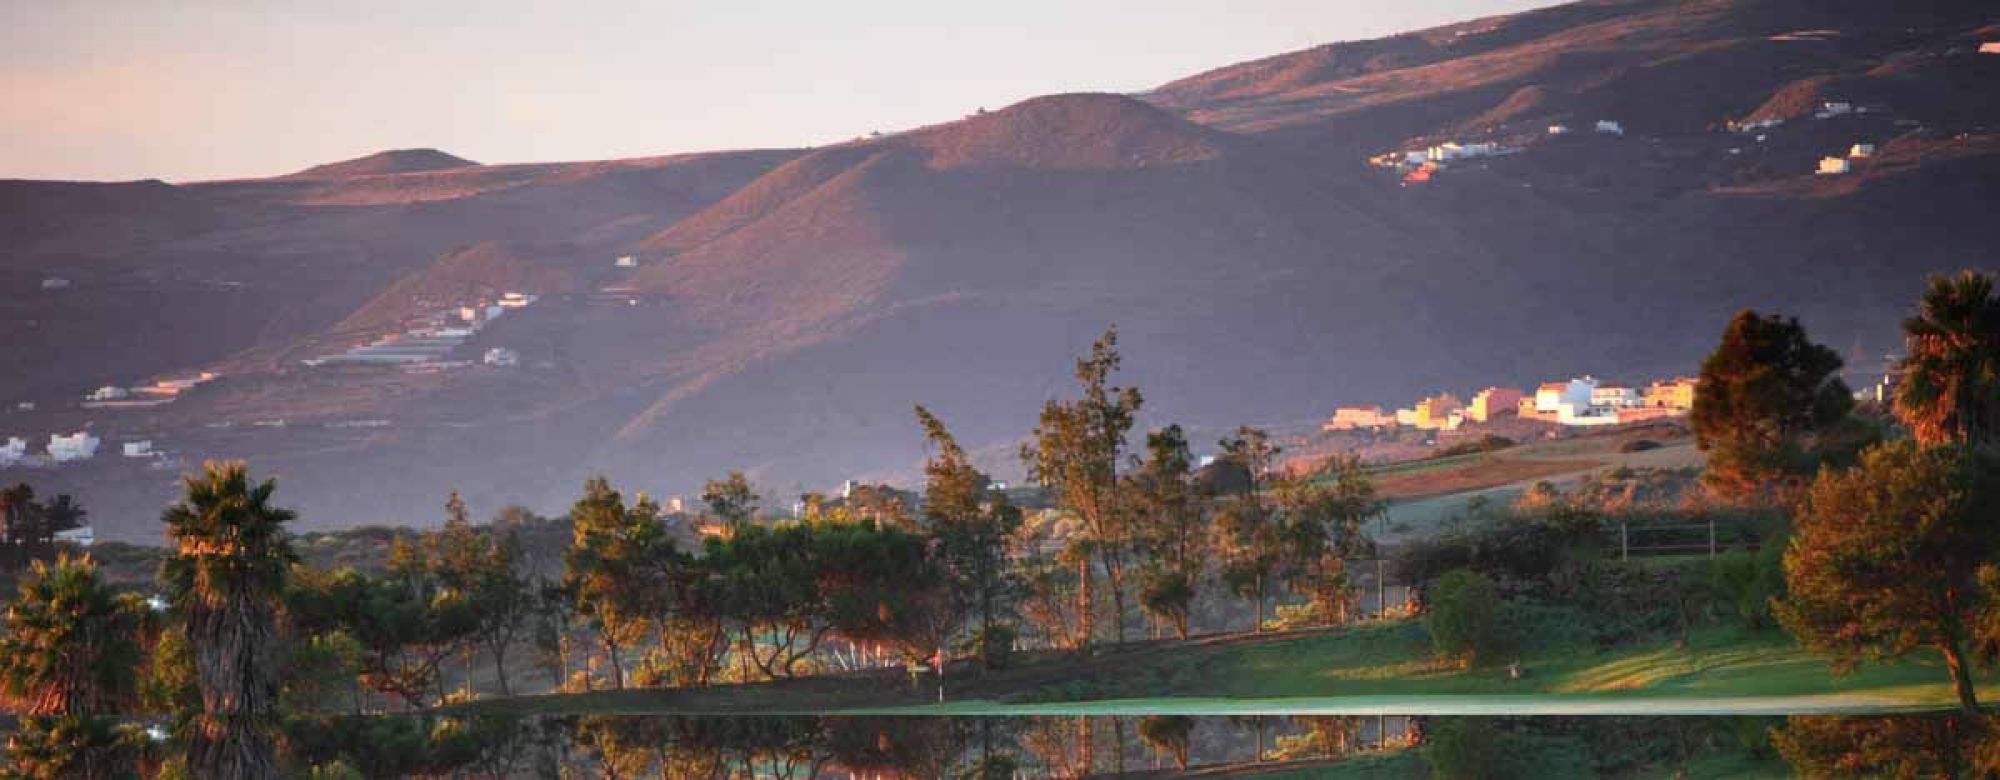 Real Club de Golf de Las Palmas carries lots of the preferred golf course within Gran Canaria